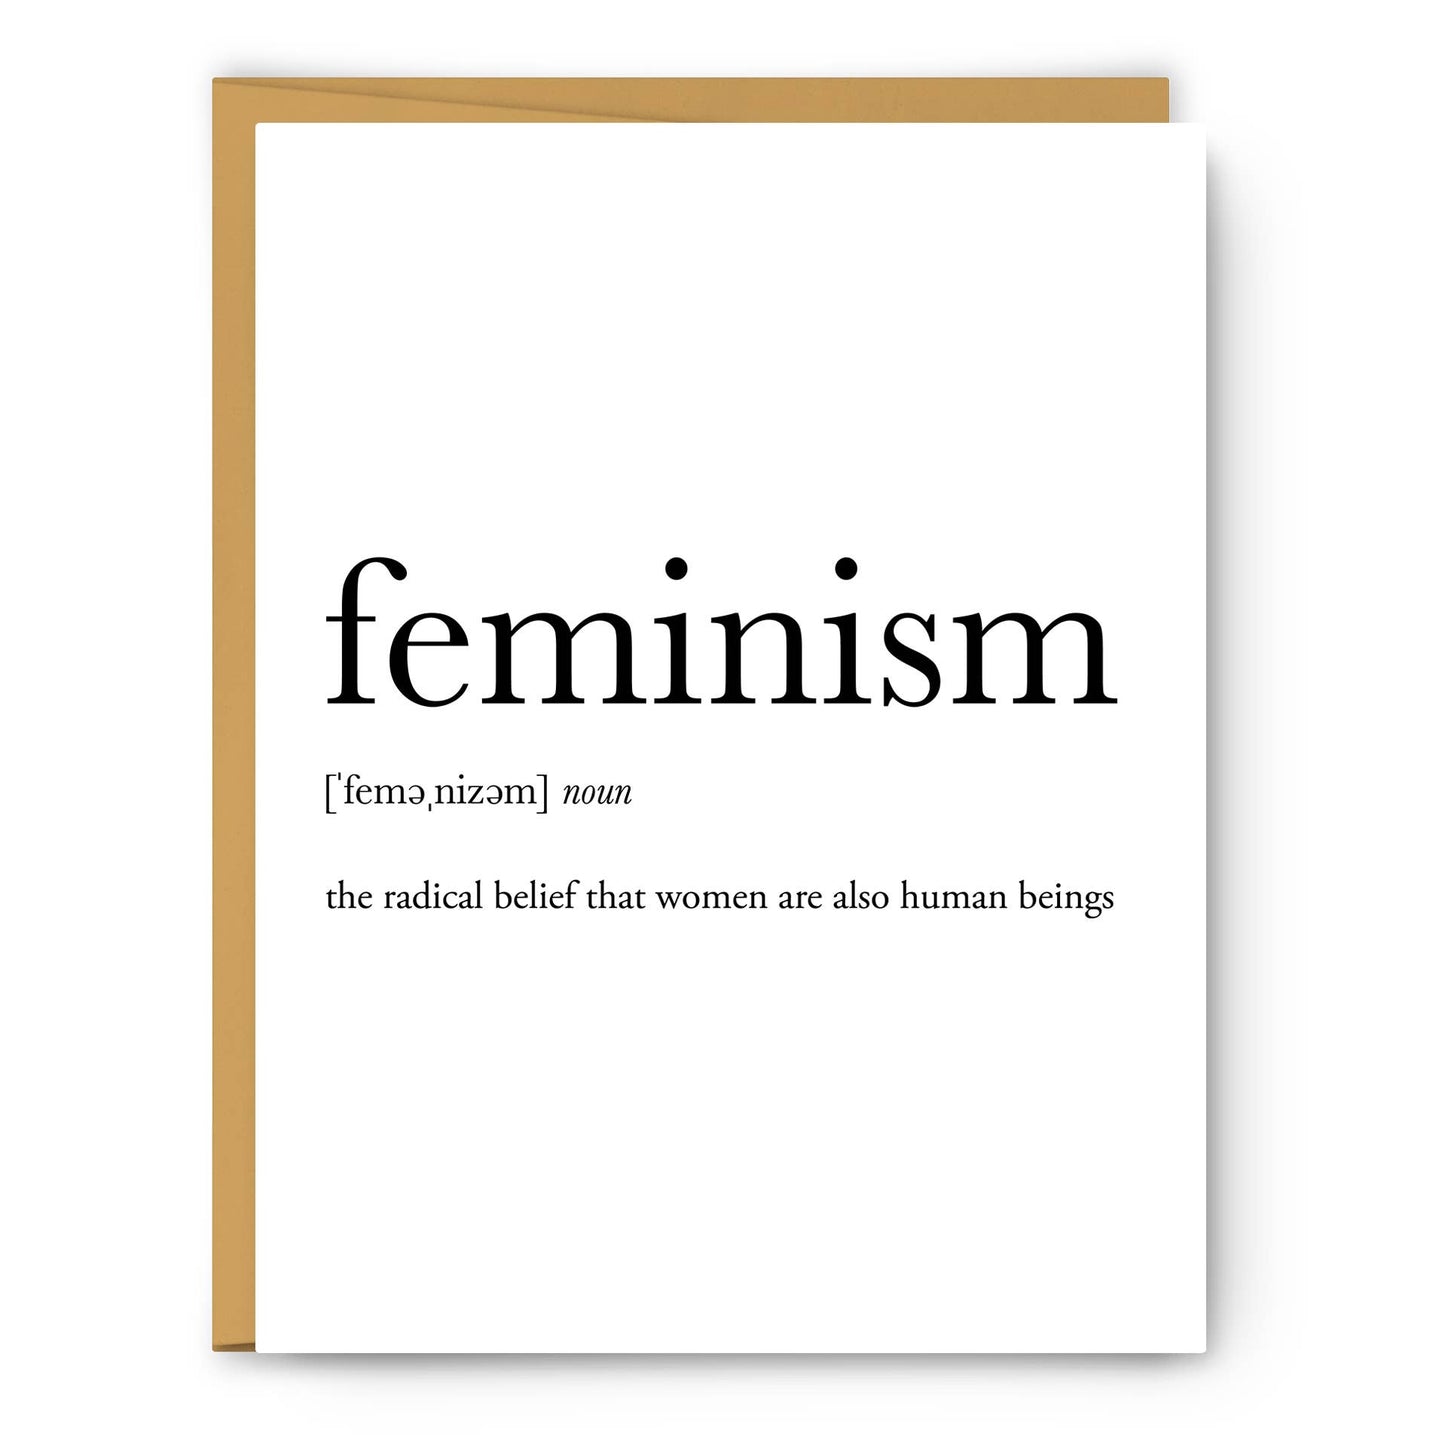 Feminism Definition Card